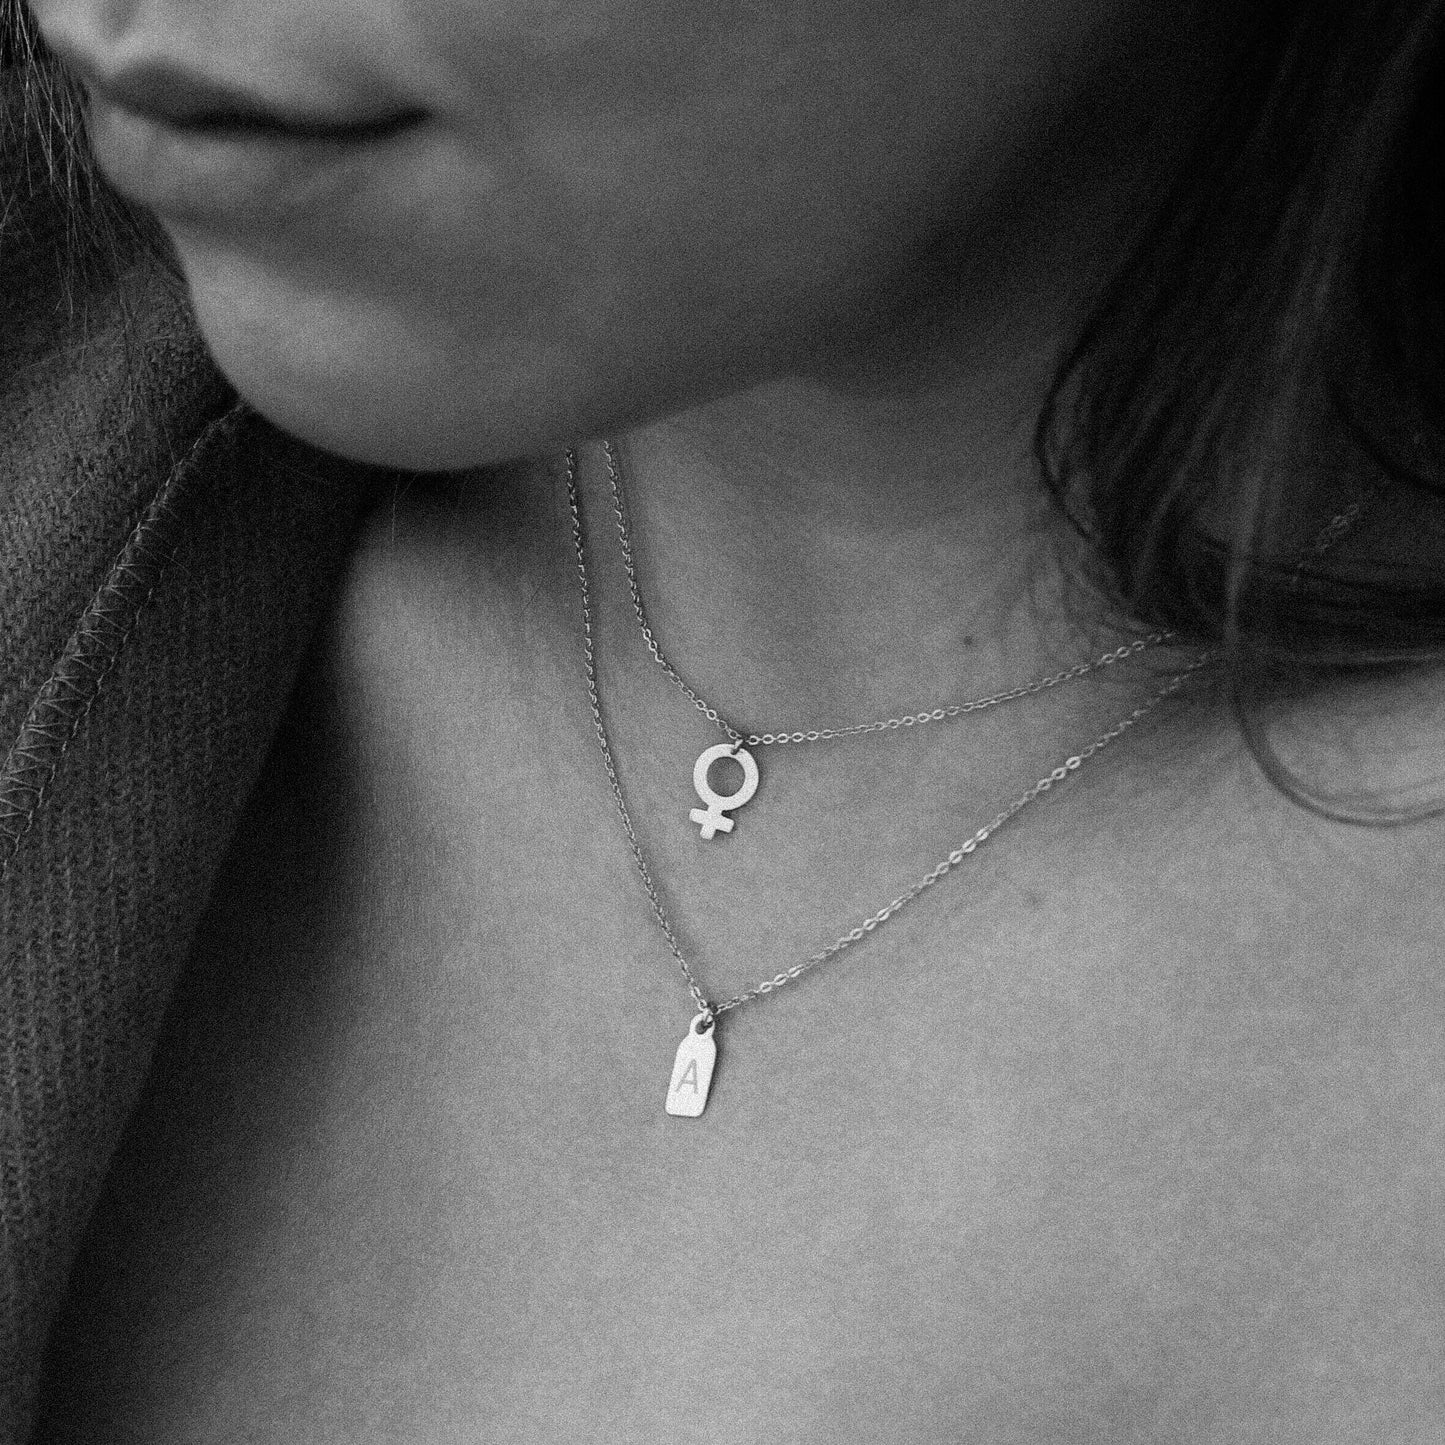 Tiny Tag Necklace